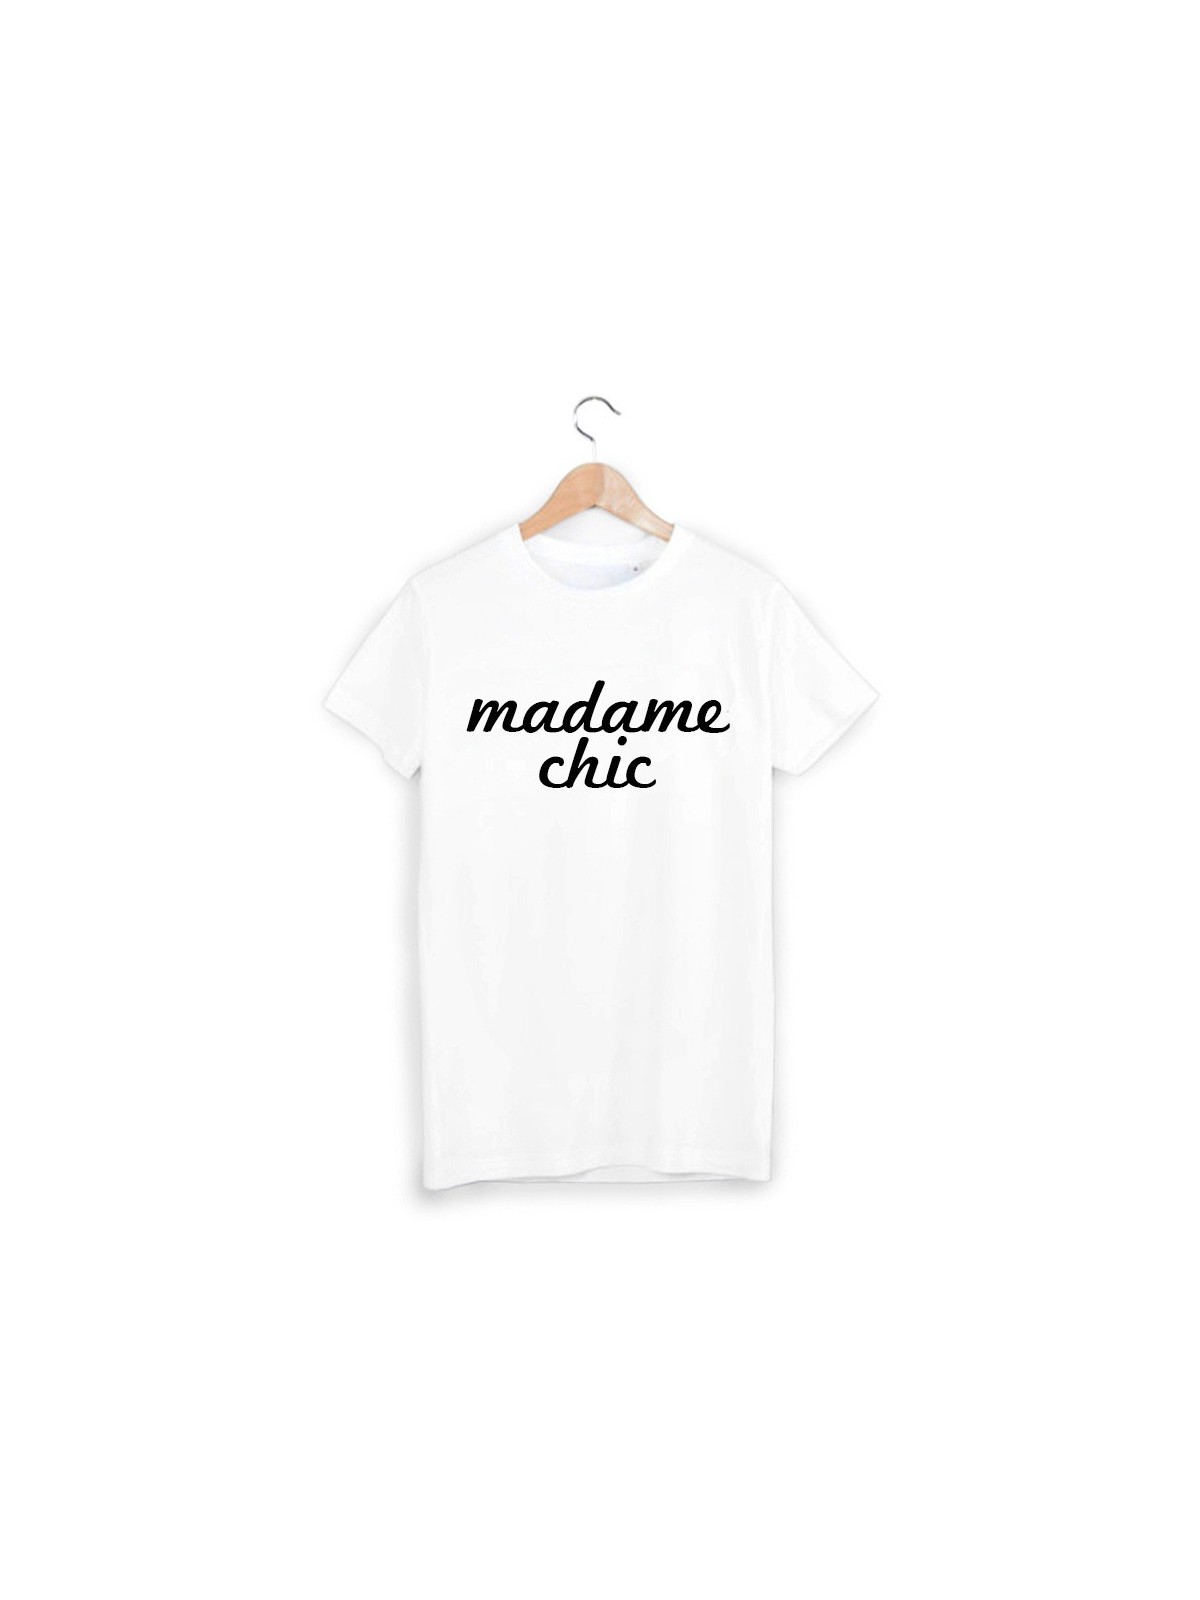 T-Shirt madame chic ref 1028